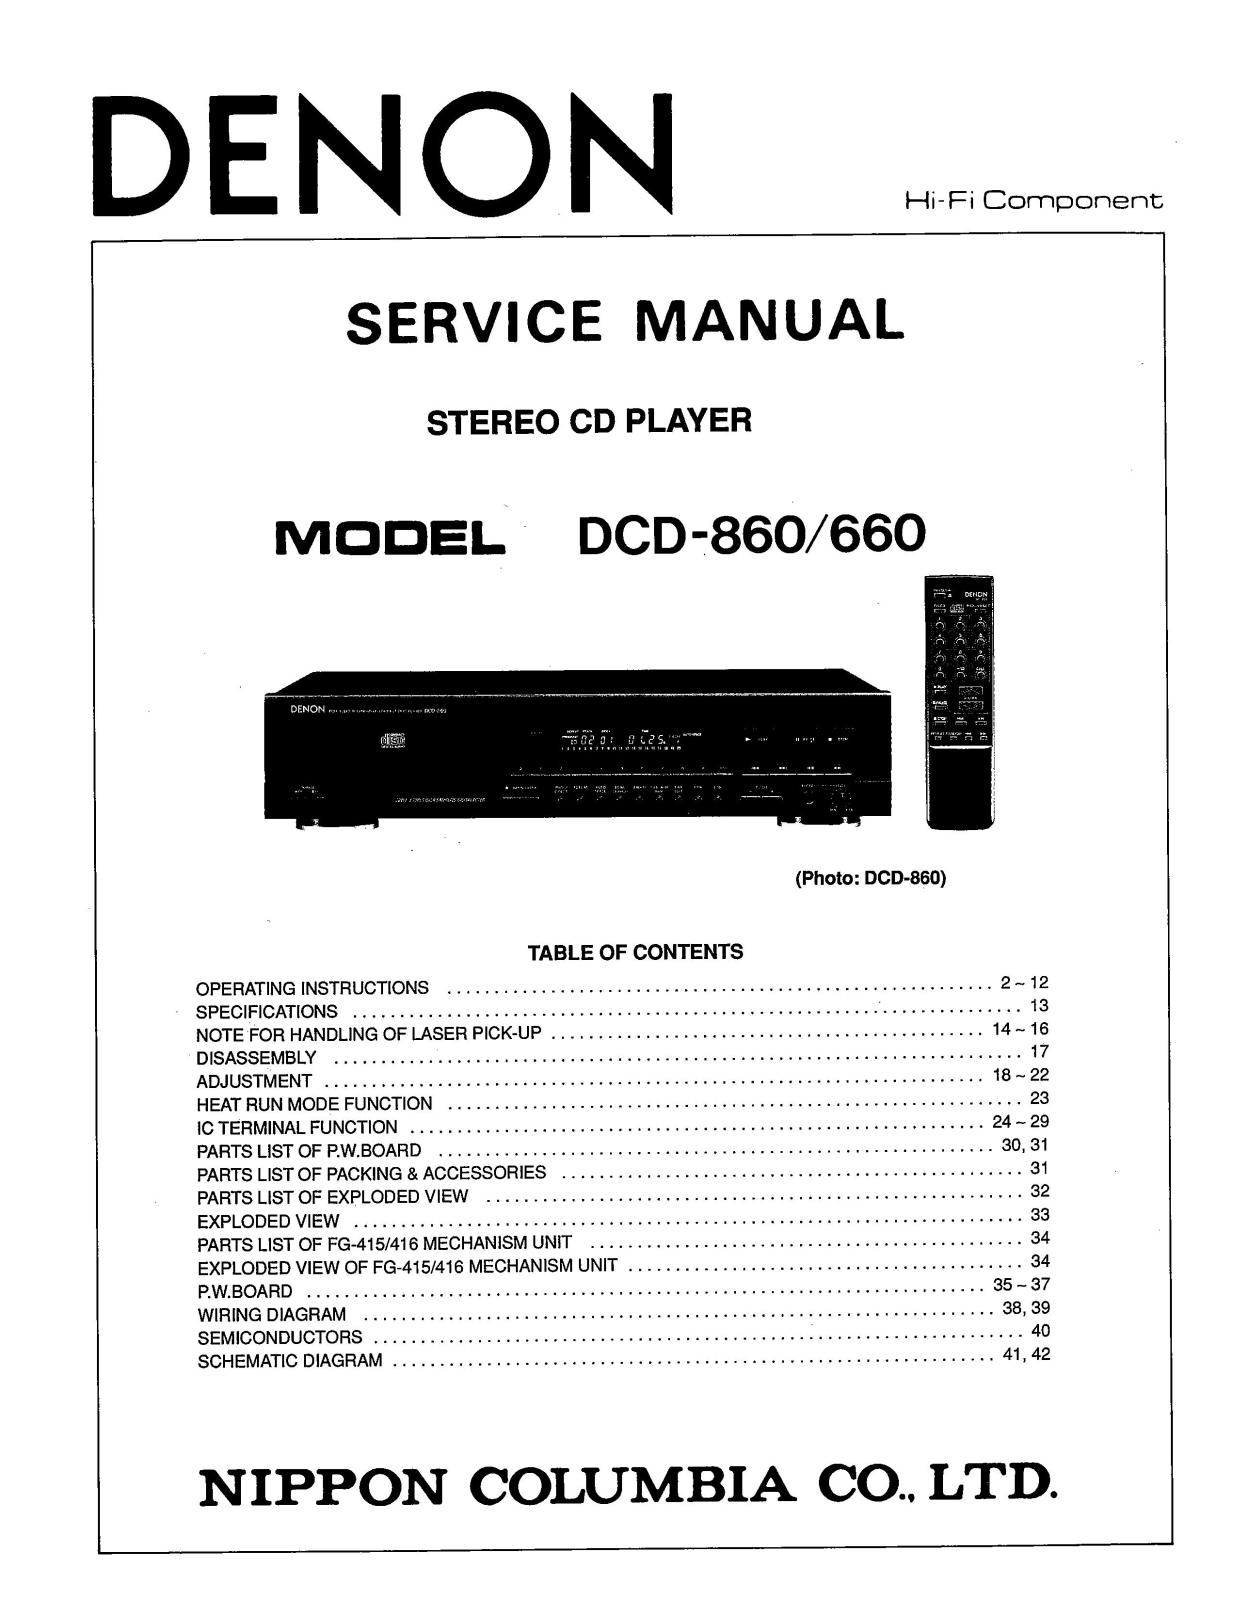 Denon DCD-660, DCD-860 Service Manual